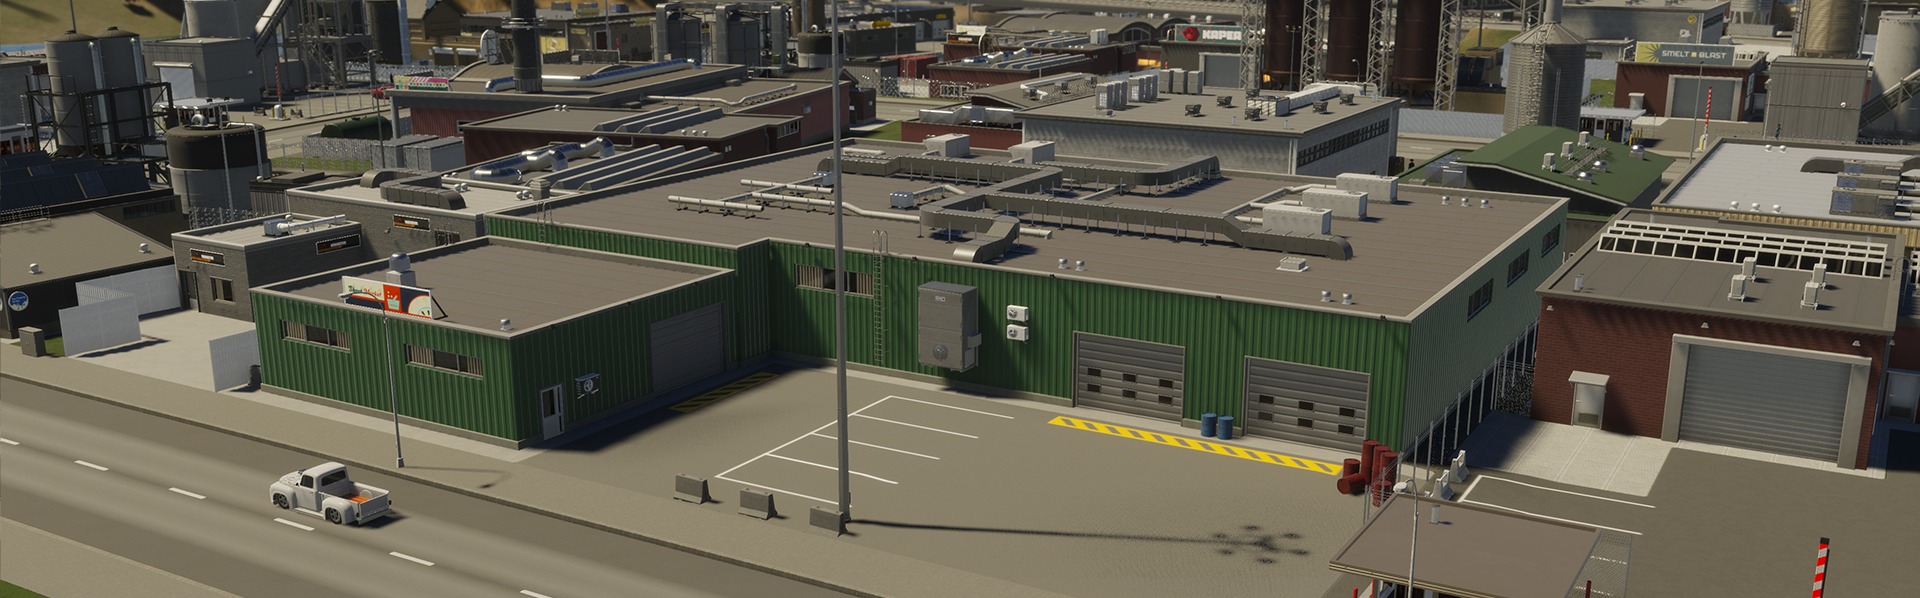 Cities II Warehouses